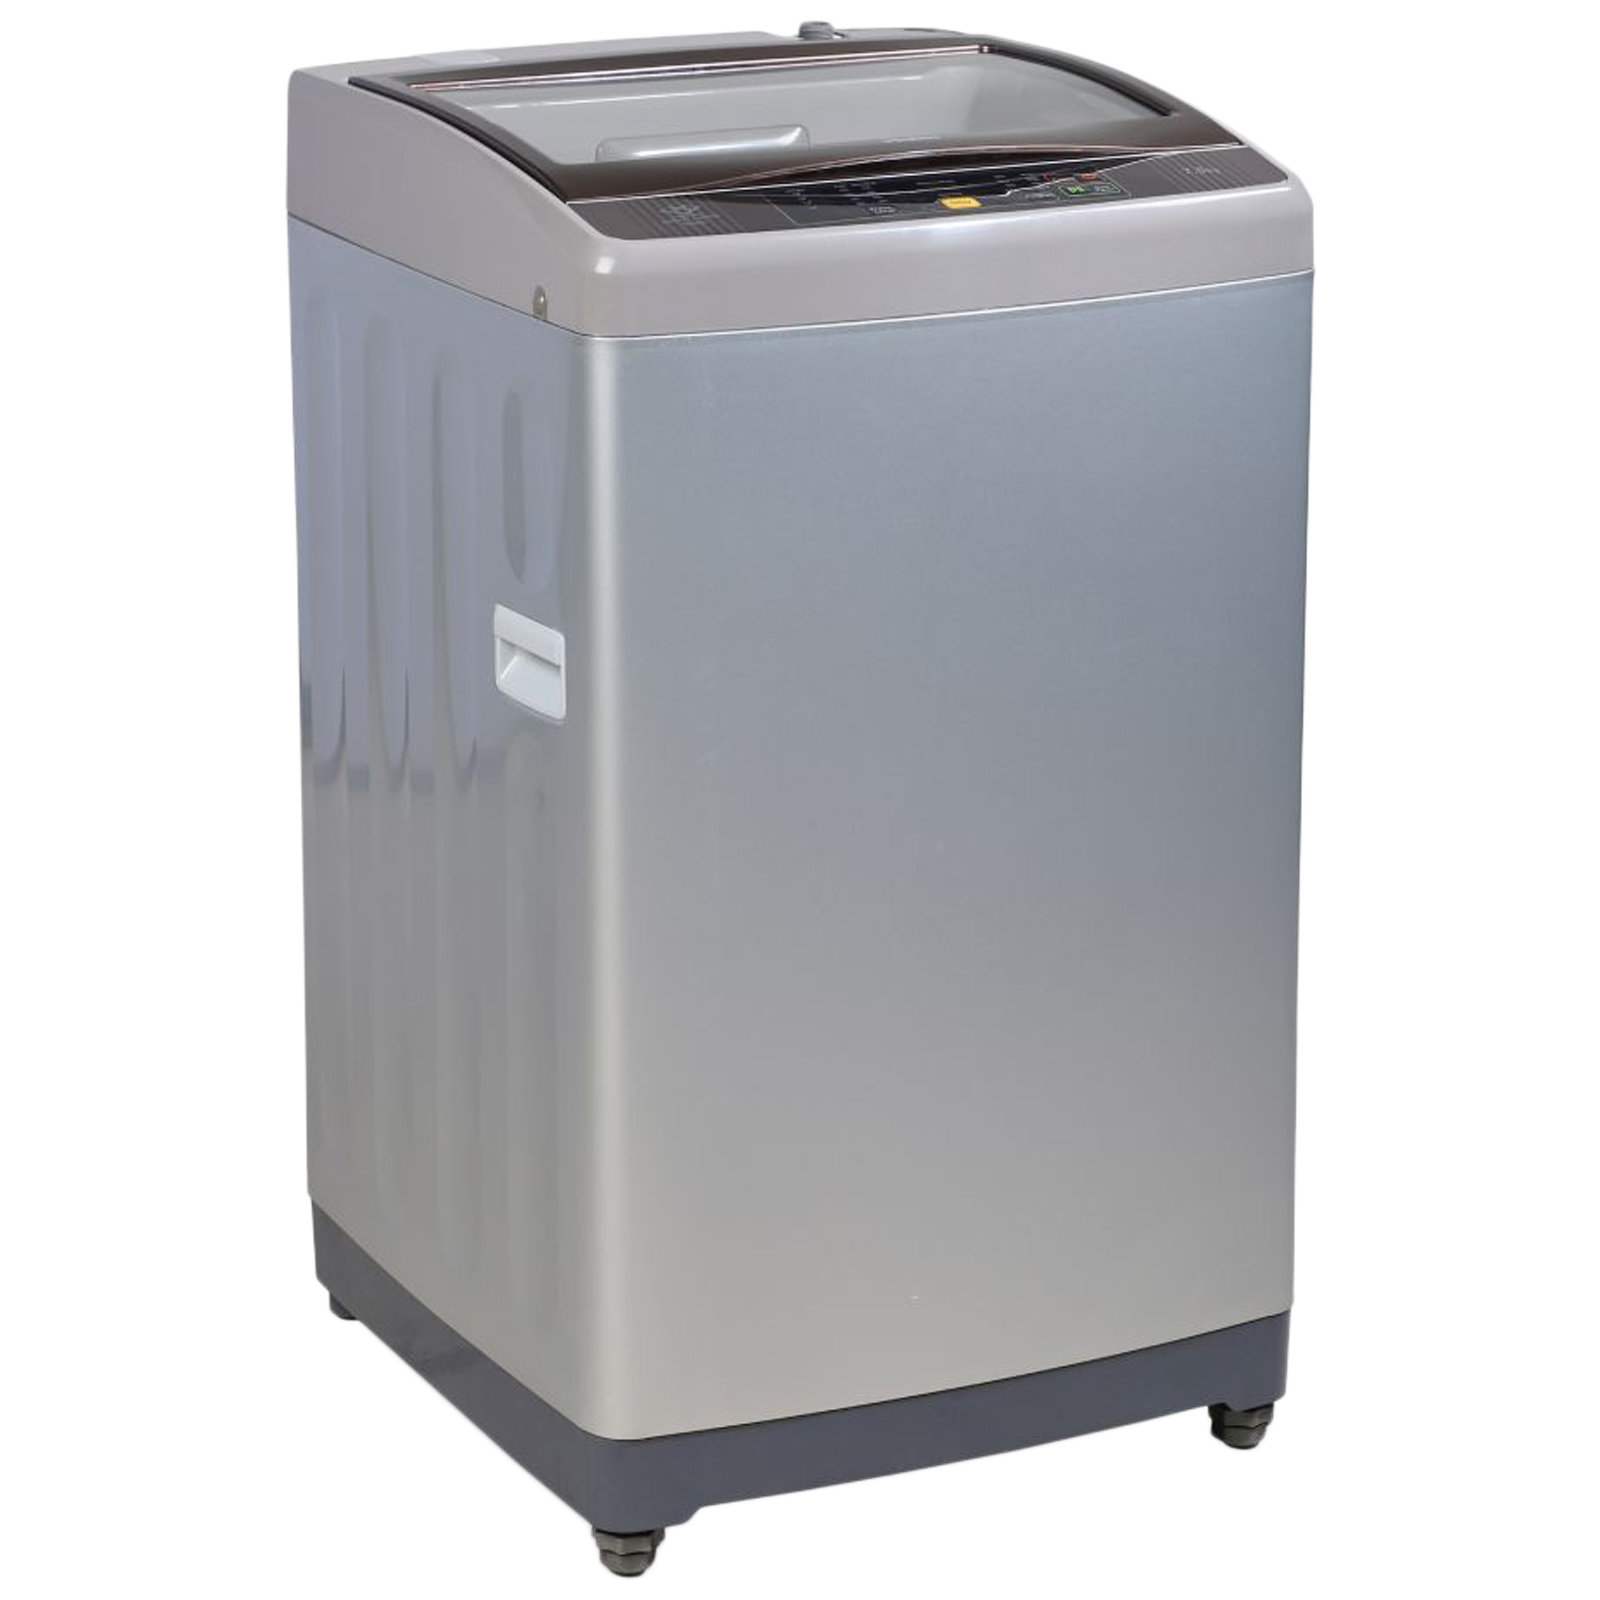 Haier 7.5 kg Fully Automatic Top Load Washing Machine (Softfall Technology, HWM75708NZP, Silver Grey)_2